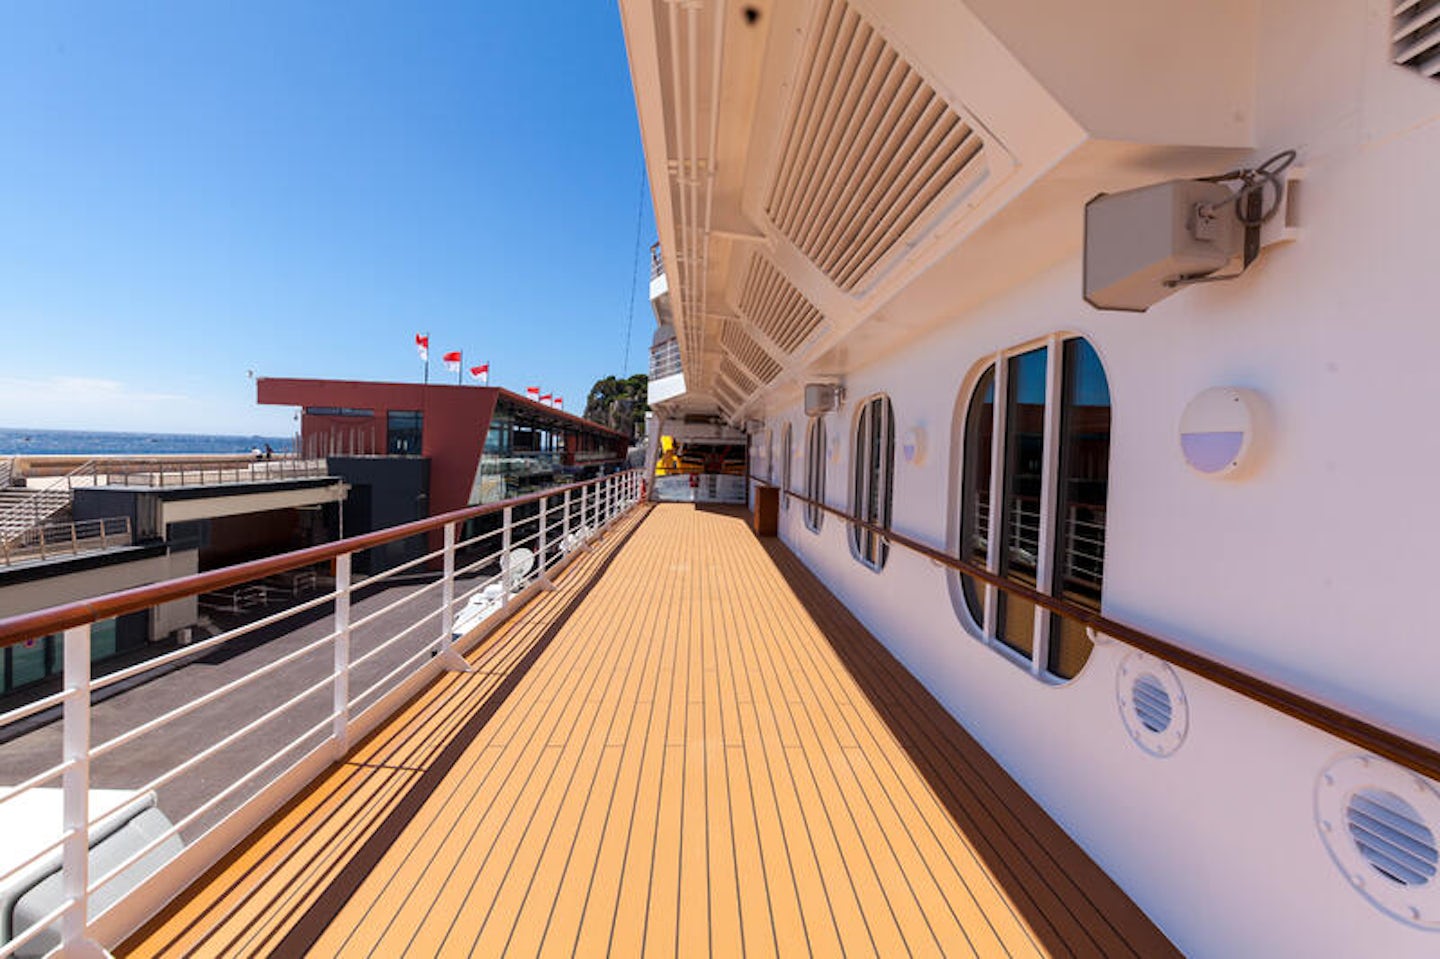 Exterior Decks on Seven Seas Explorer